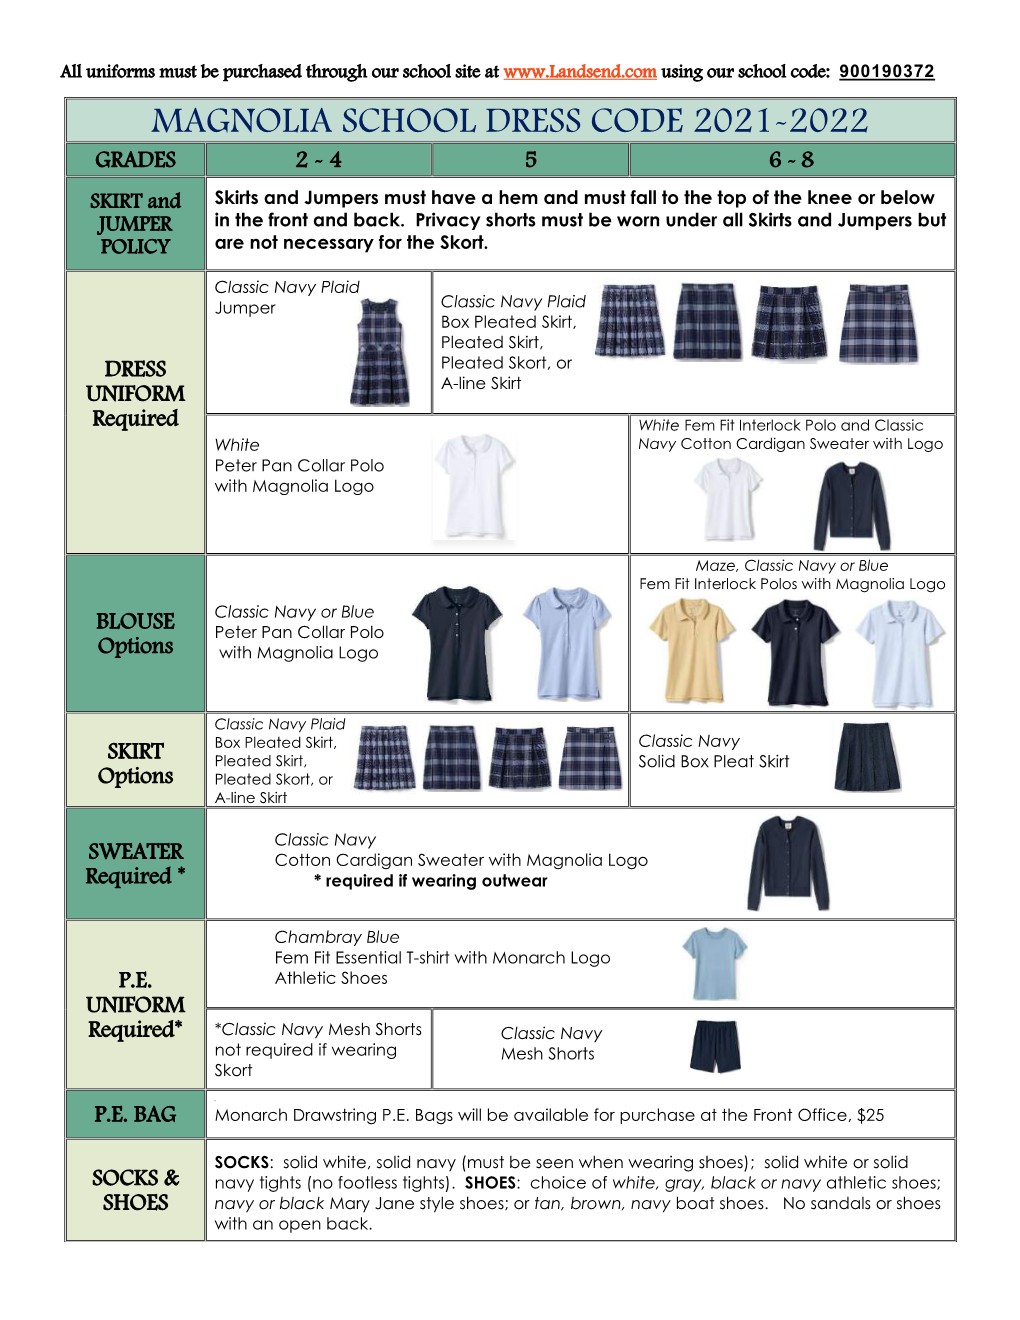 Magnolia School Dress Code 2021-2022